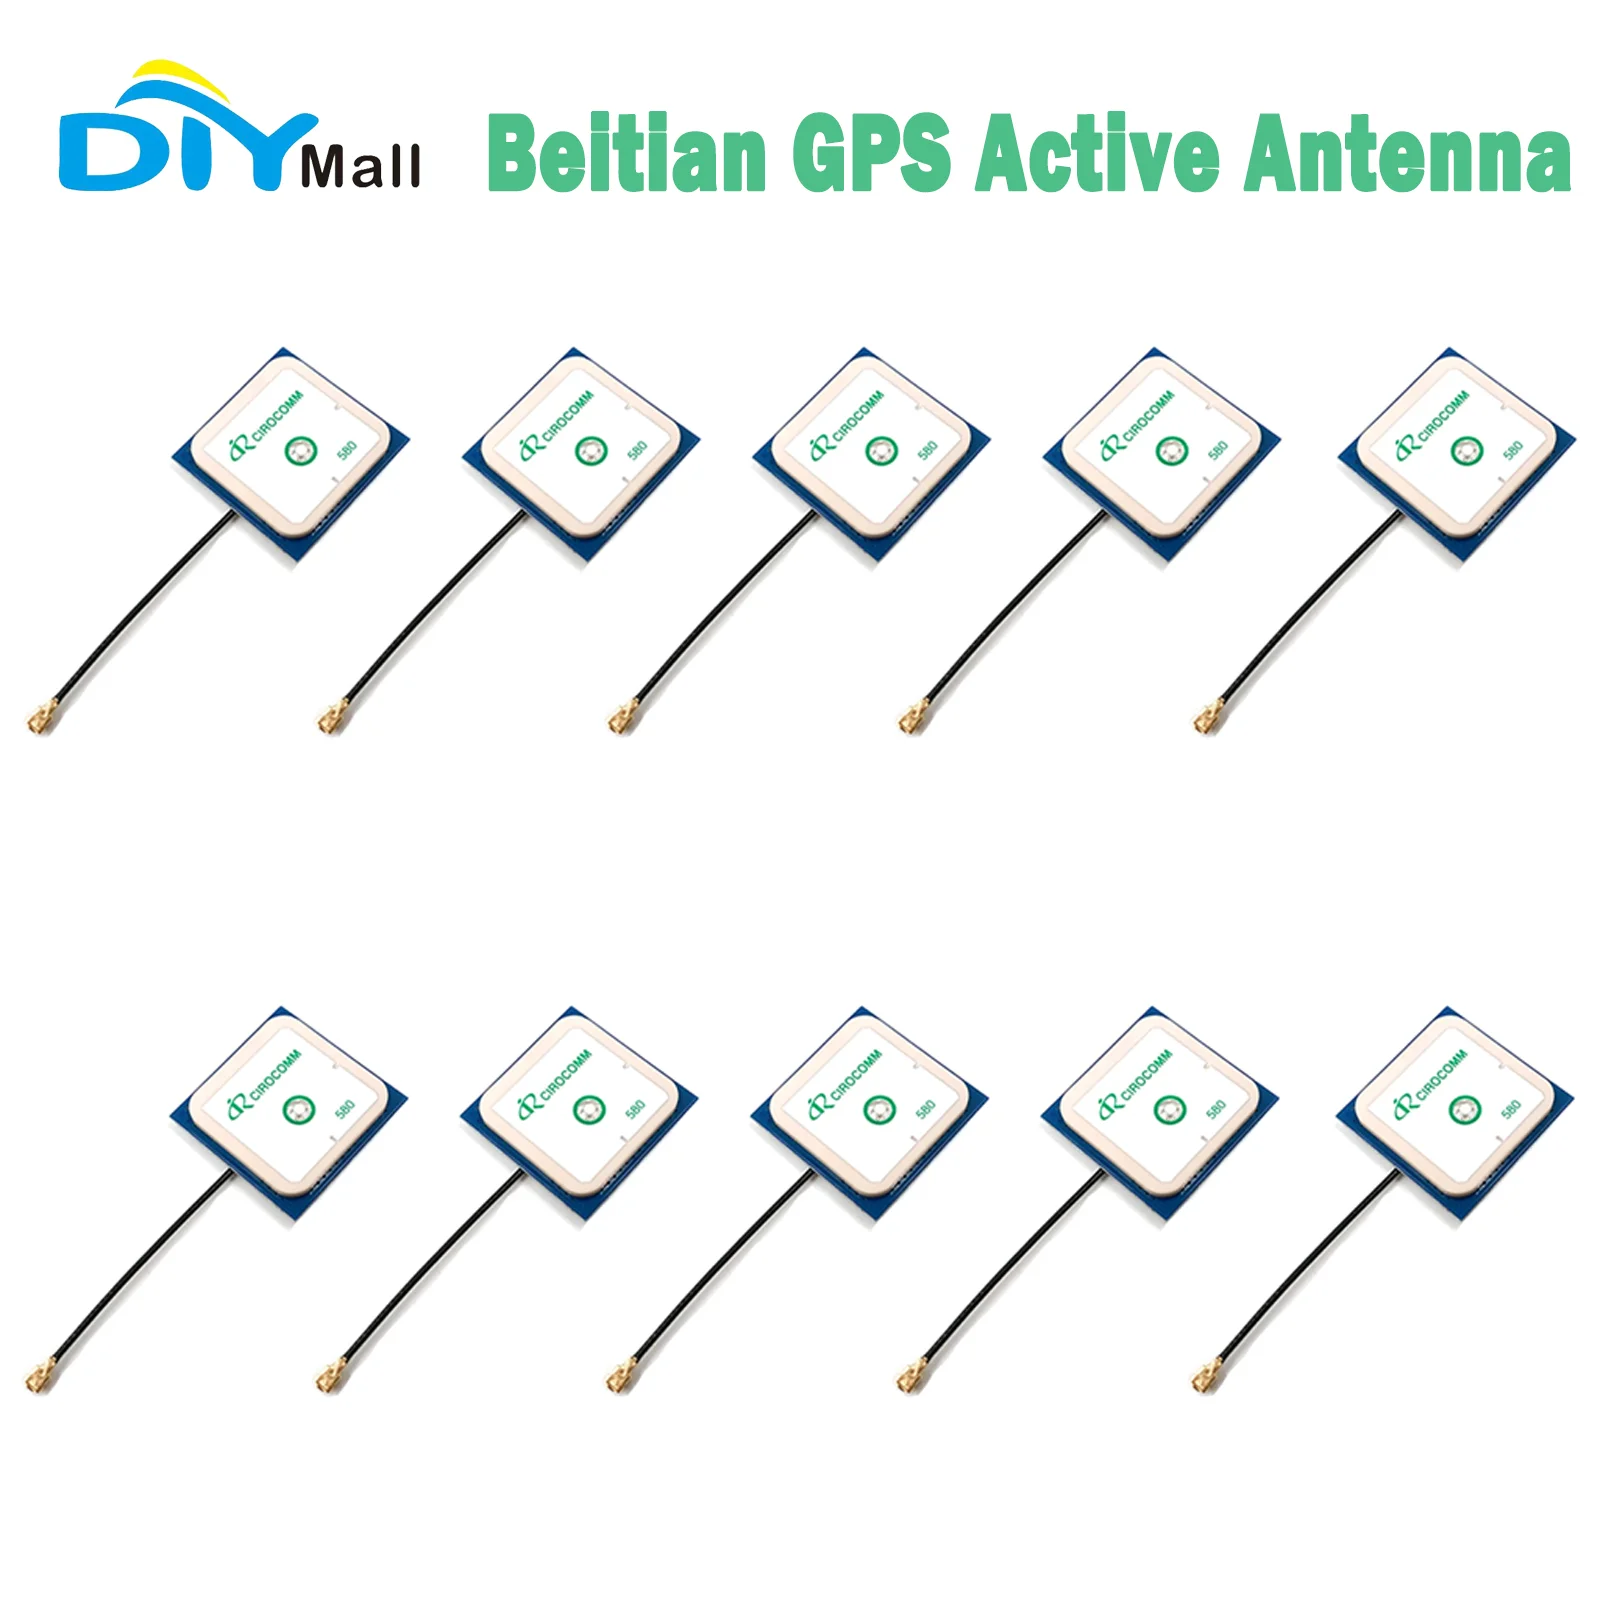 

BT-580 Cirocomm GPS Active Internal Antenna 32db High Gain Ceramic Antenna IPEX Connector 25x25x2mm 1.13 Cable 5cm Long